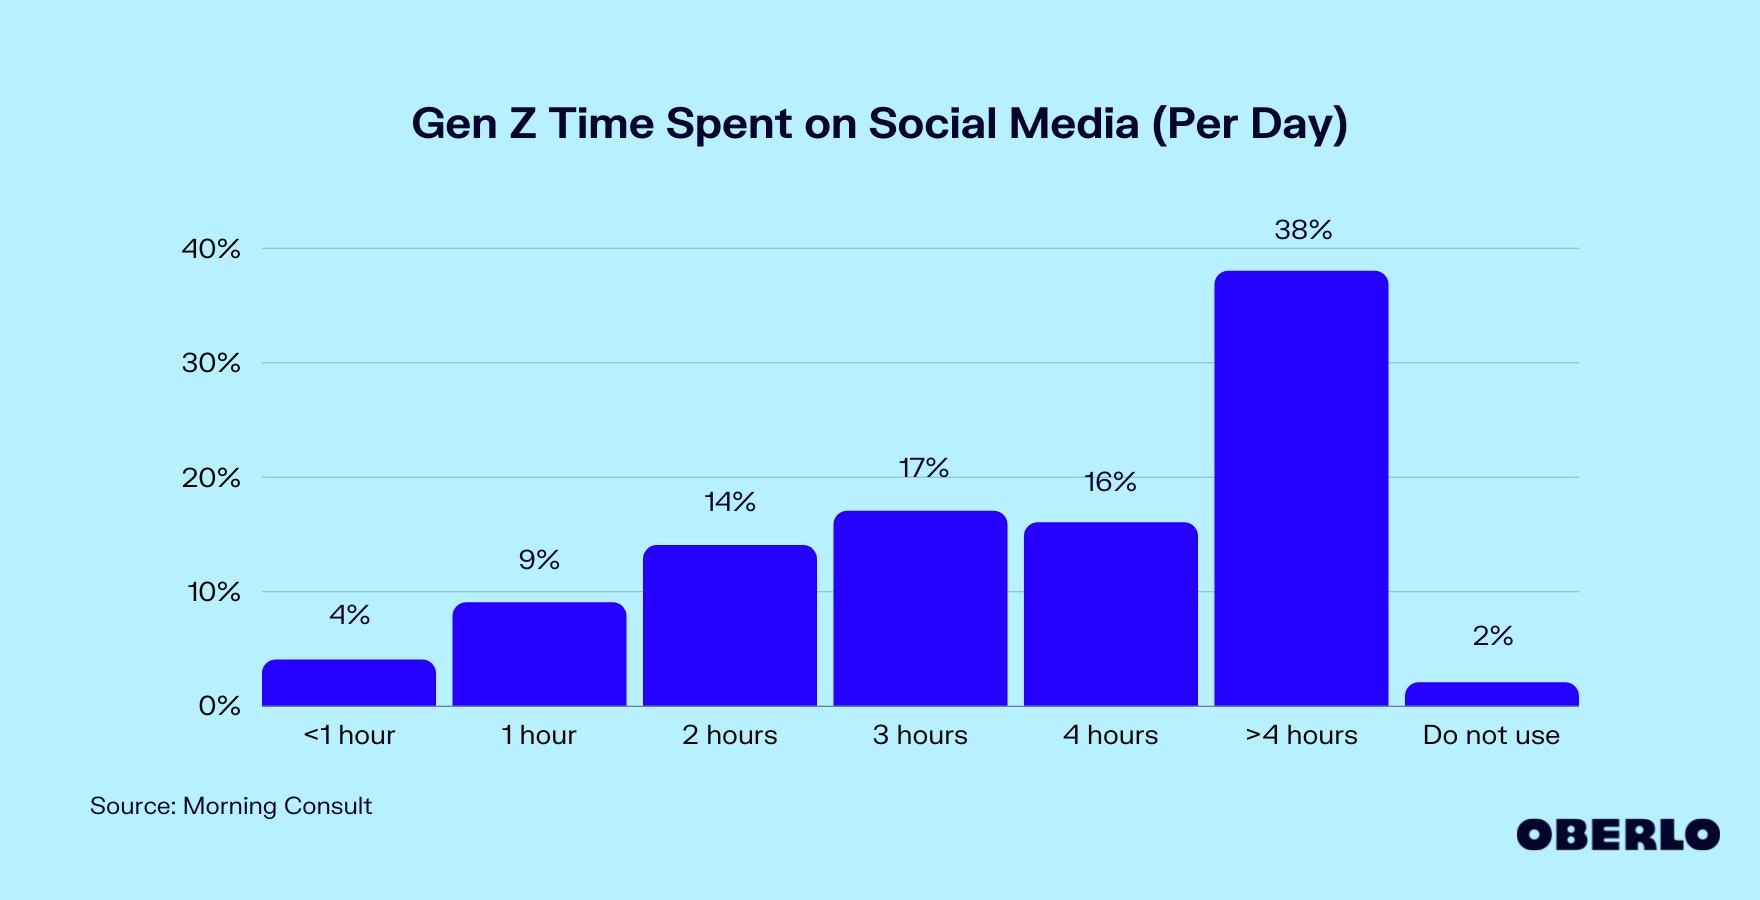 Chart showing Gen Z's time spent on social media per day